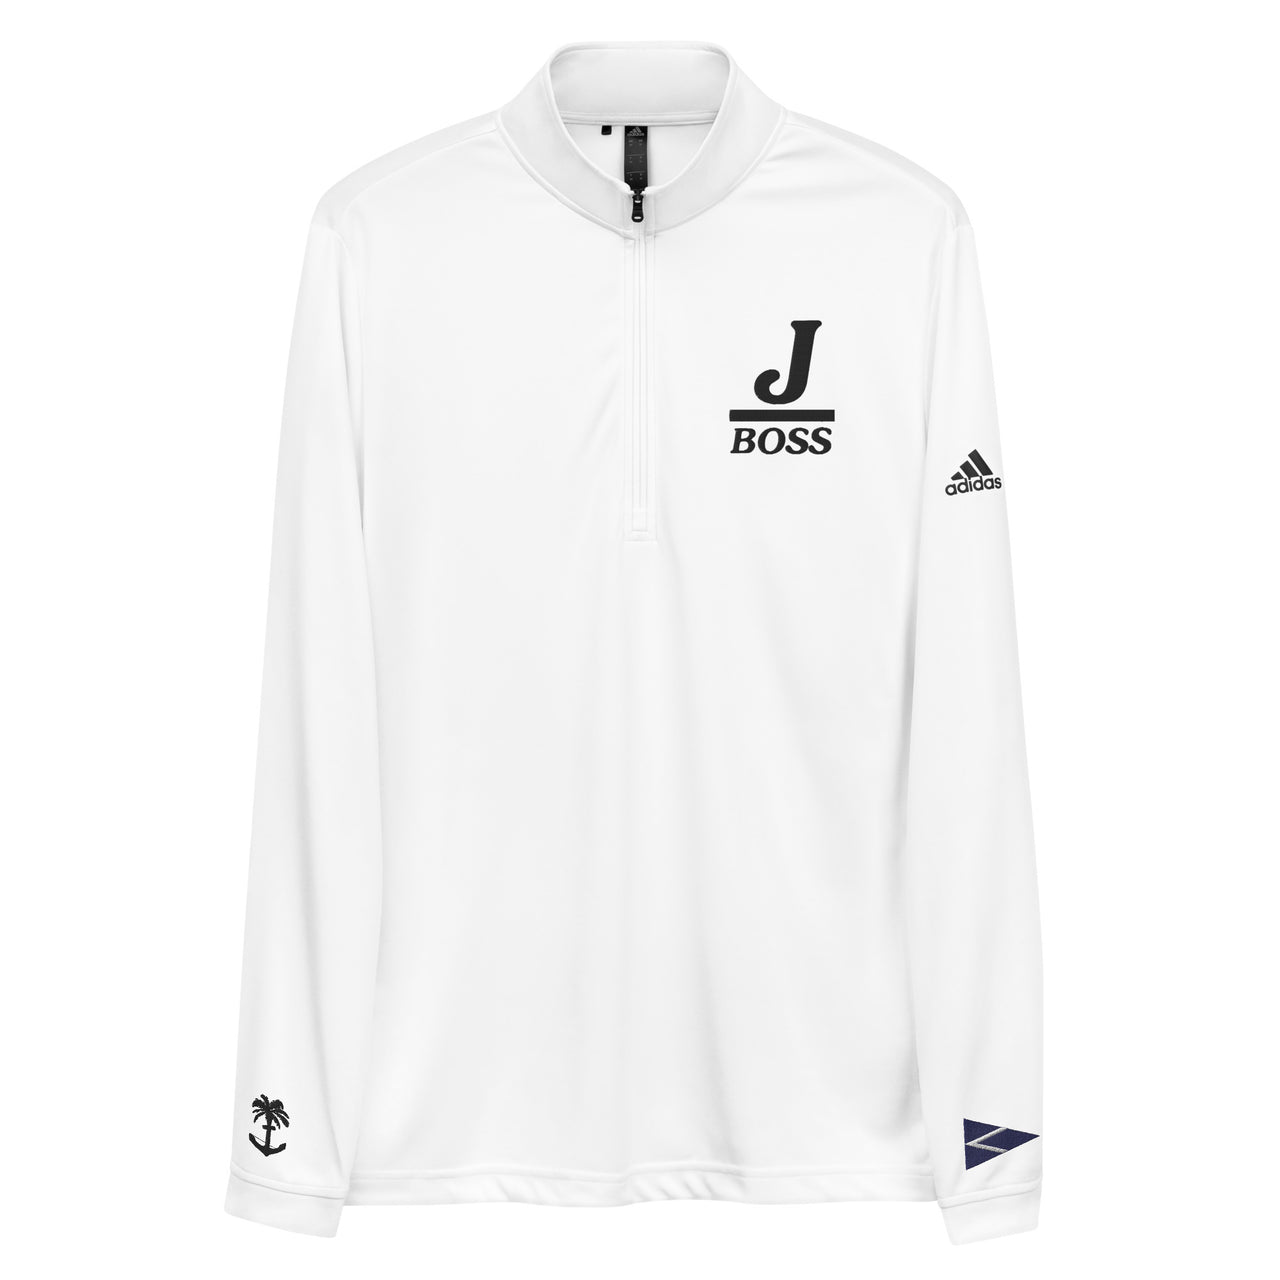 JBoss- Premium EMBROIDERED Quarter zip pullover (Adidas)